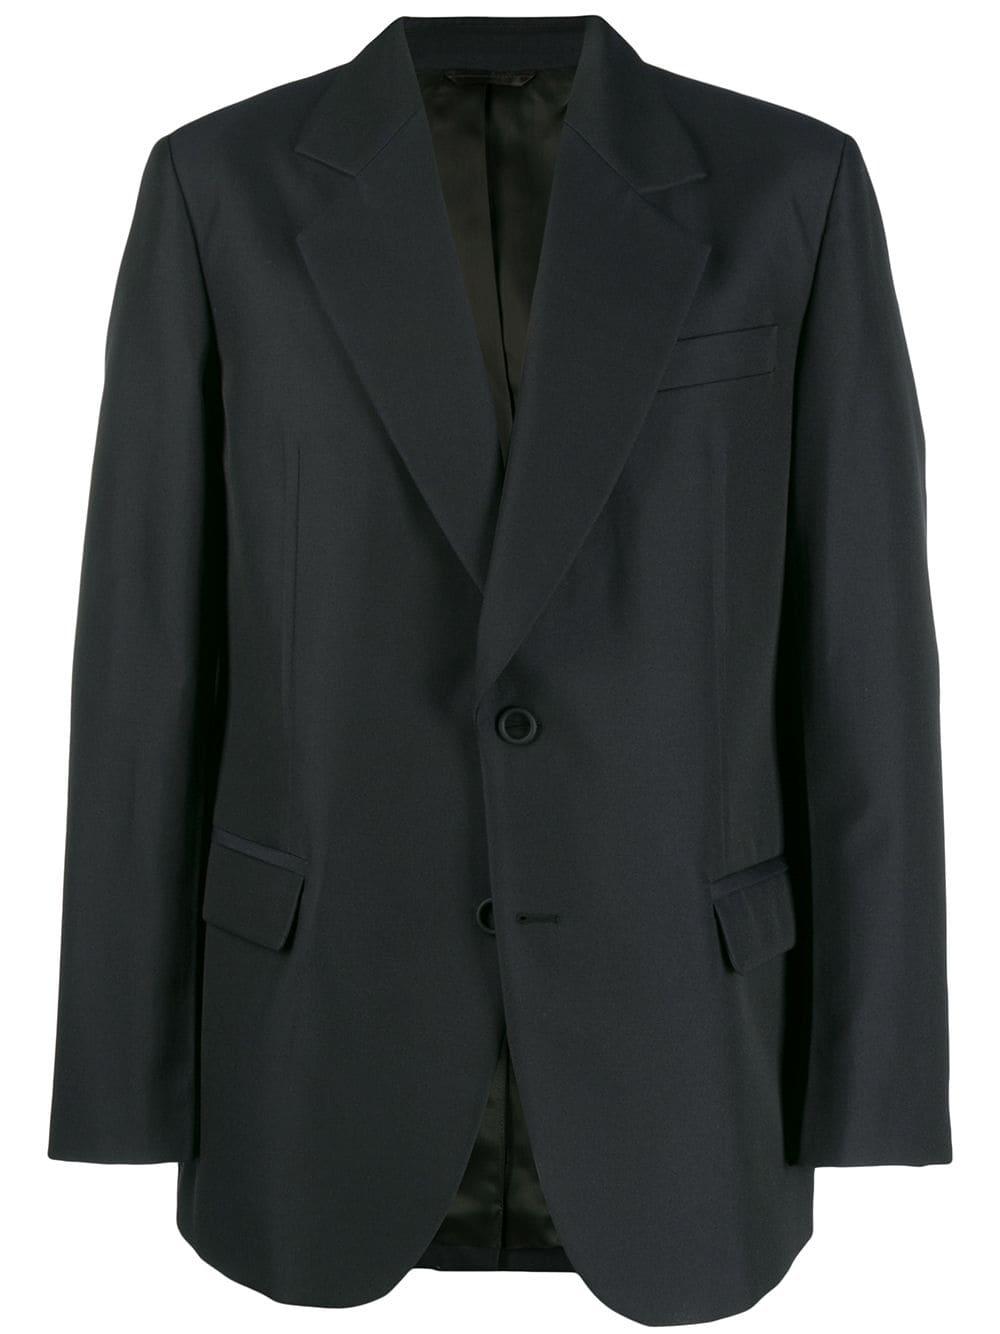 Acne Studios Cotton Classic Tailored Blazer in Black for Men - Lyst